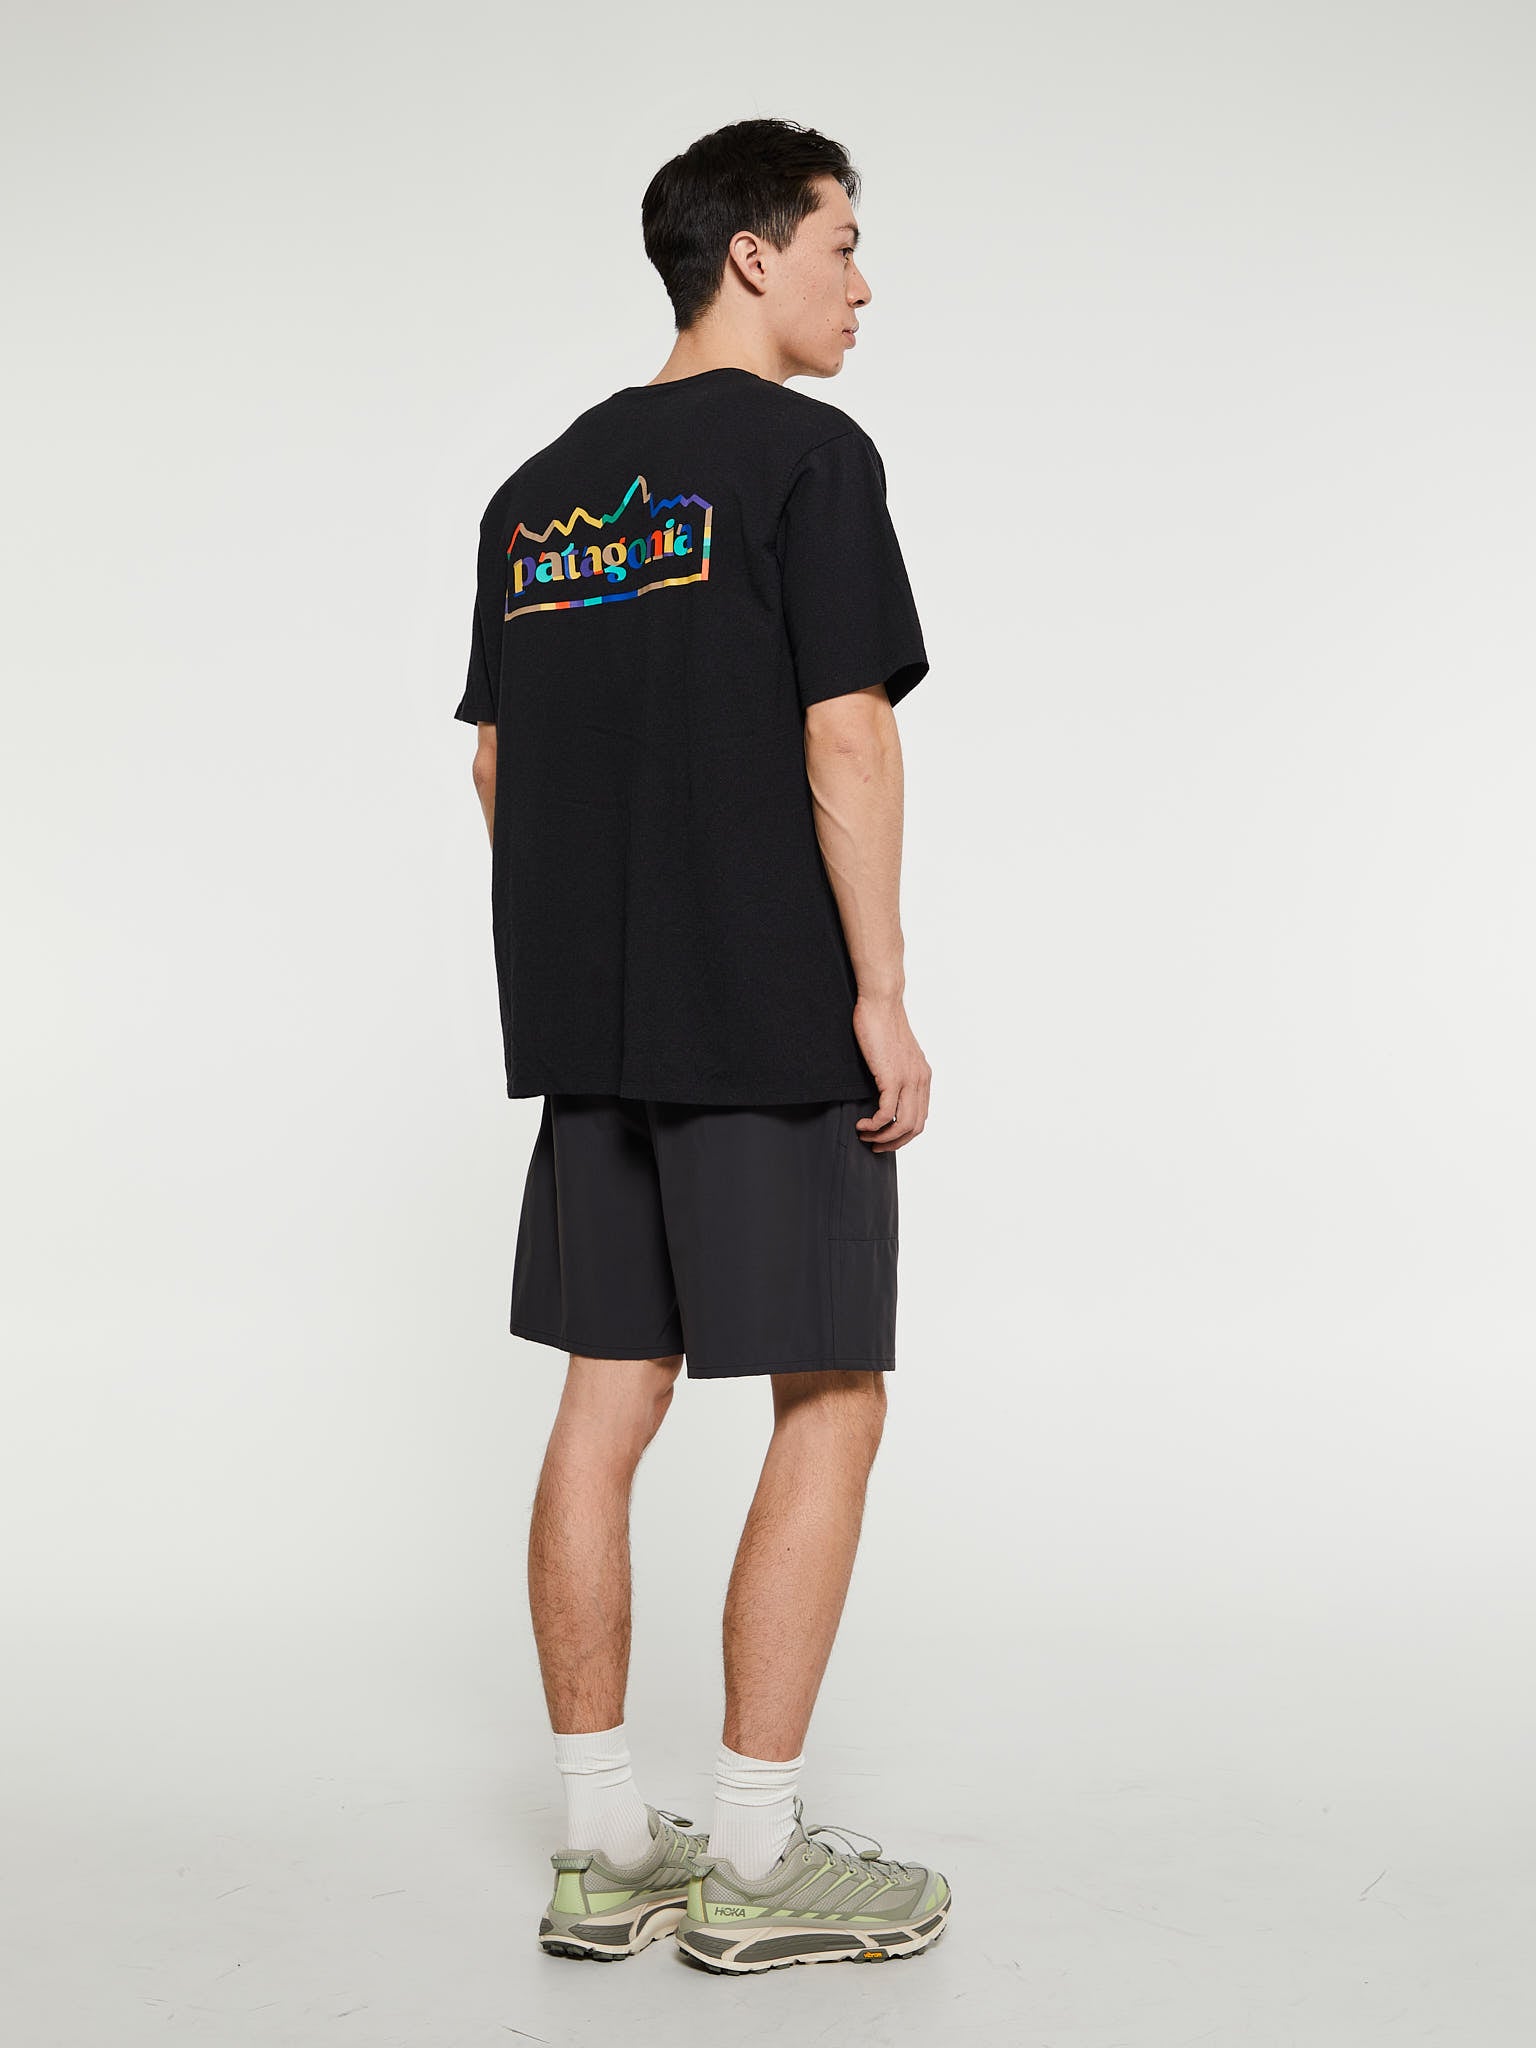 Unity Fitz Responsibili-Tee T-Shirt in Black